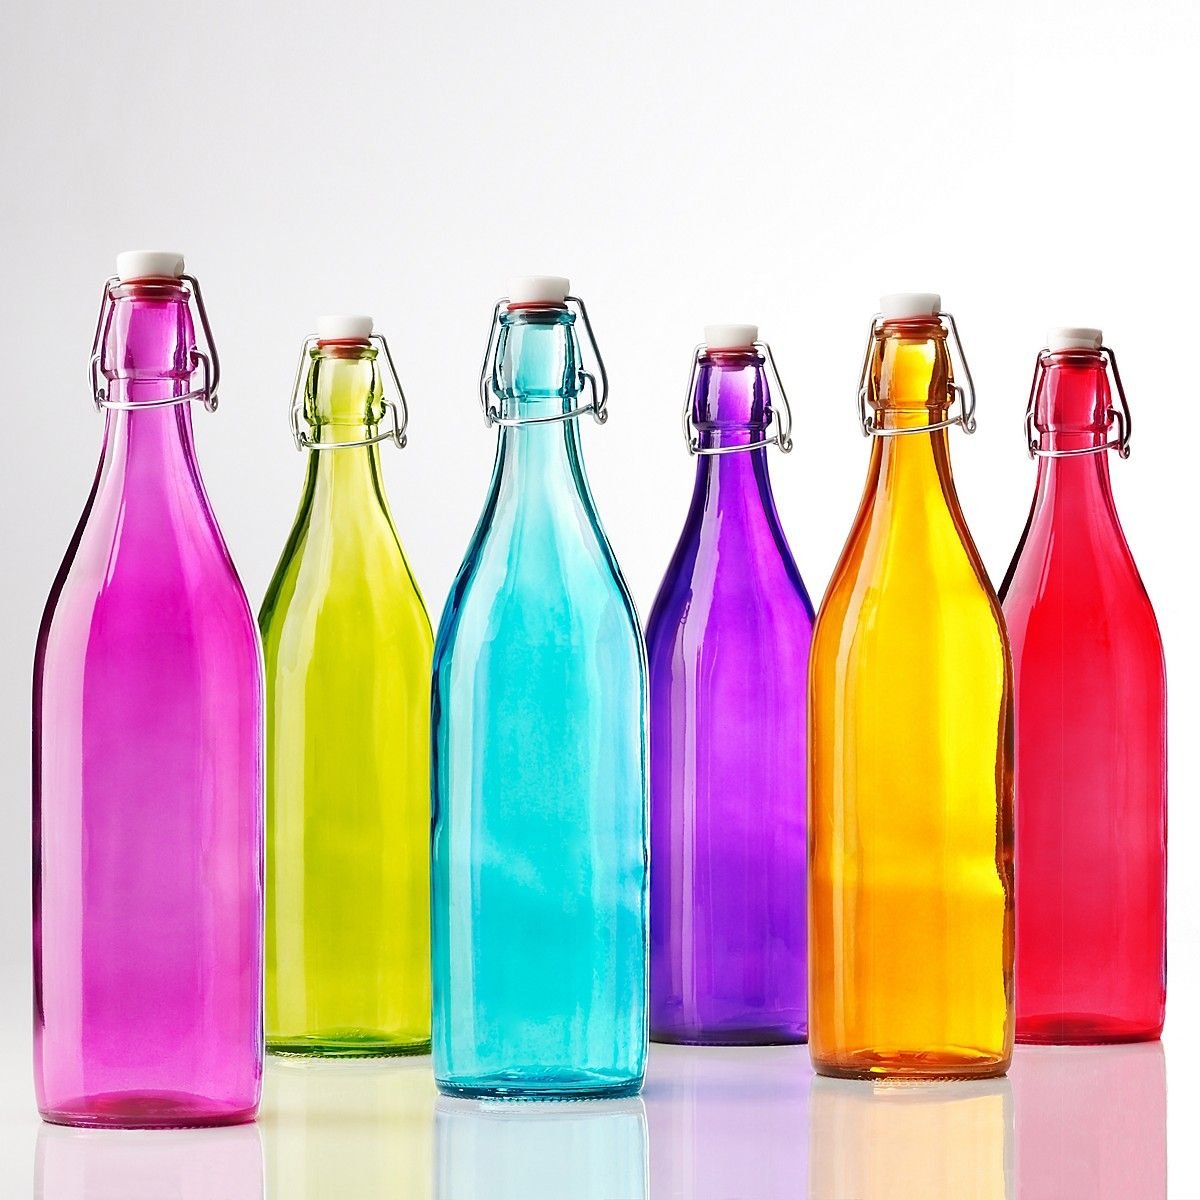 https://cdn.everythingkitchens.com/media/catalog/product/cache/70d878061ea71e5b62358b2b67547186/b/o/bormioli-rocco-colored-glass-bottles.jpg